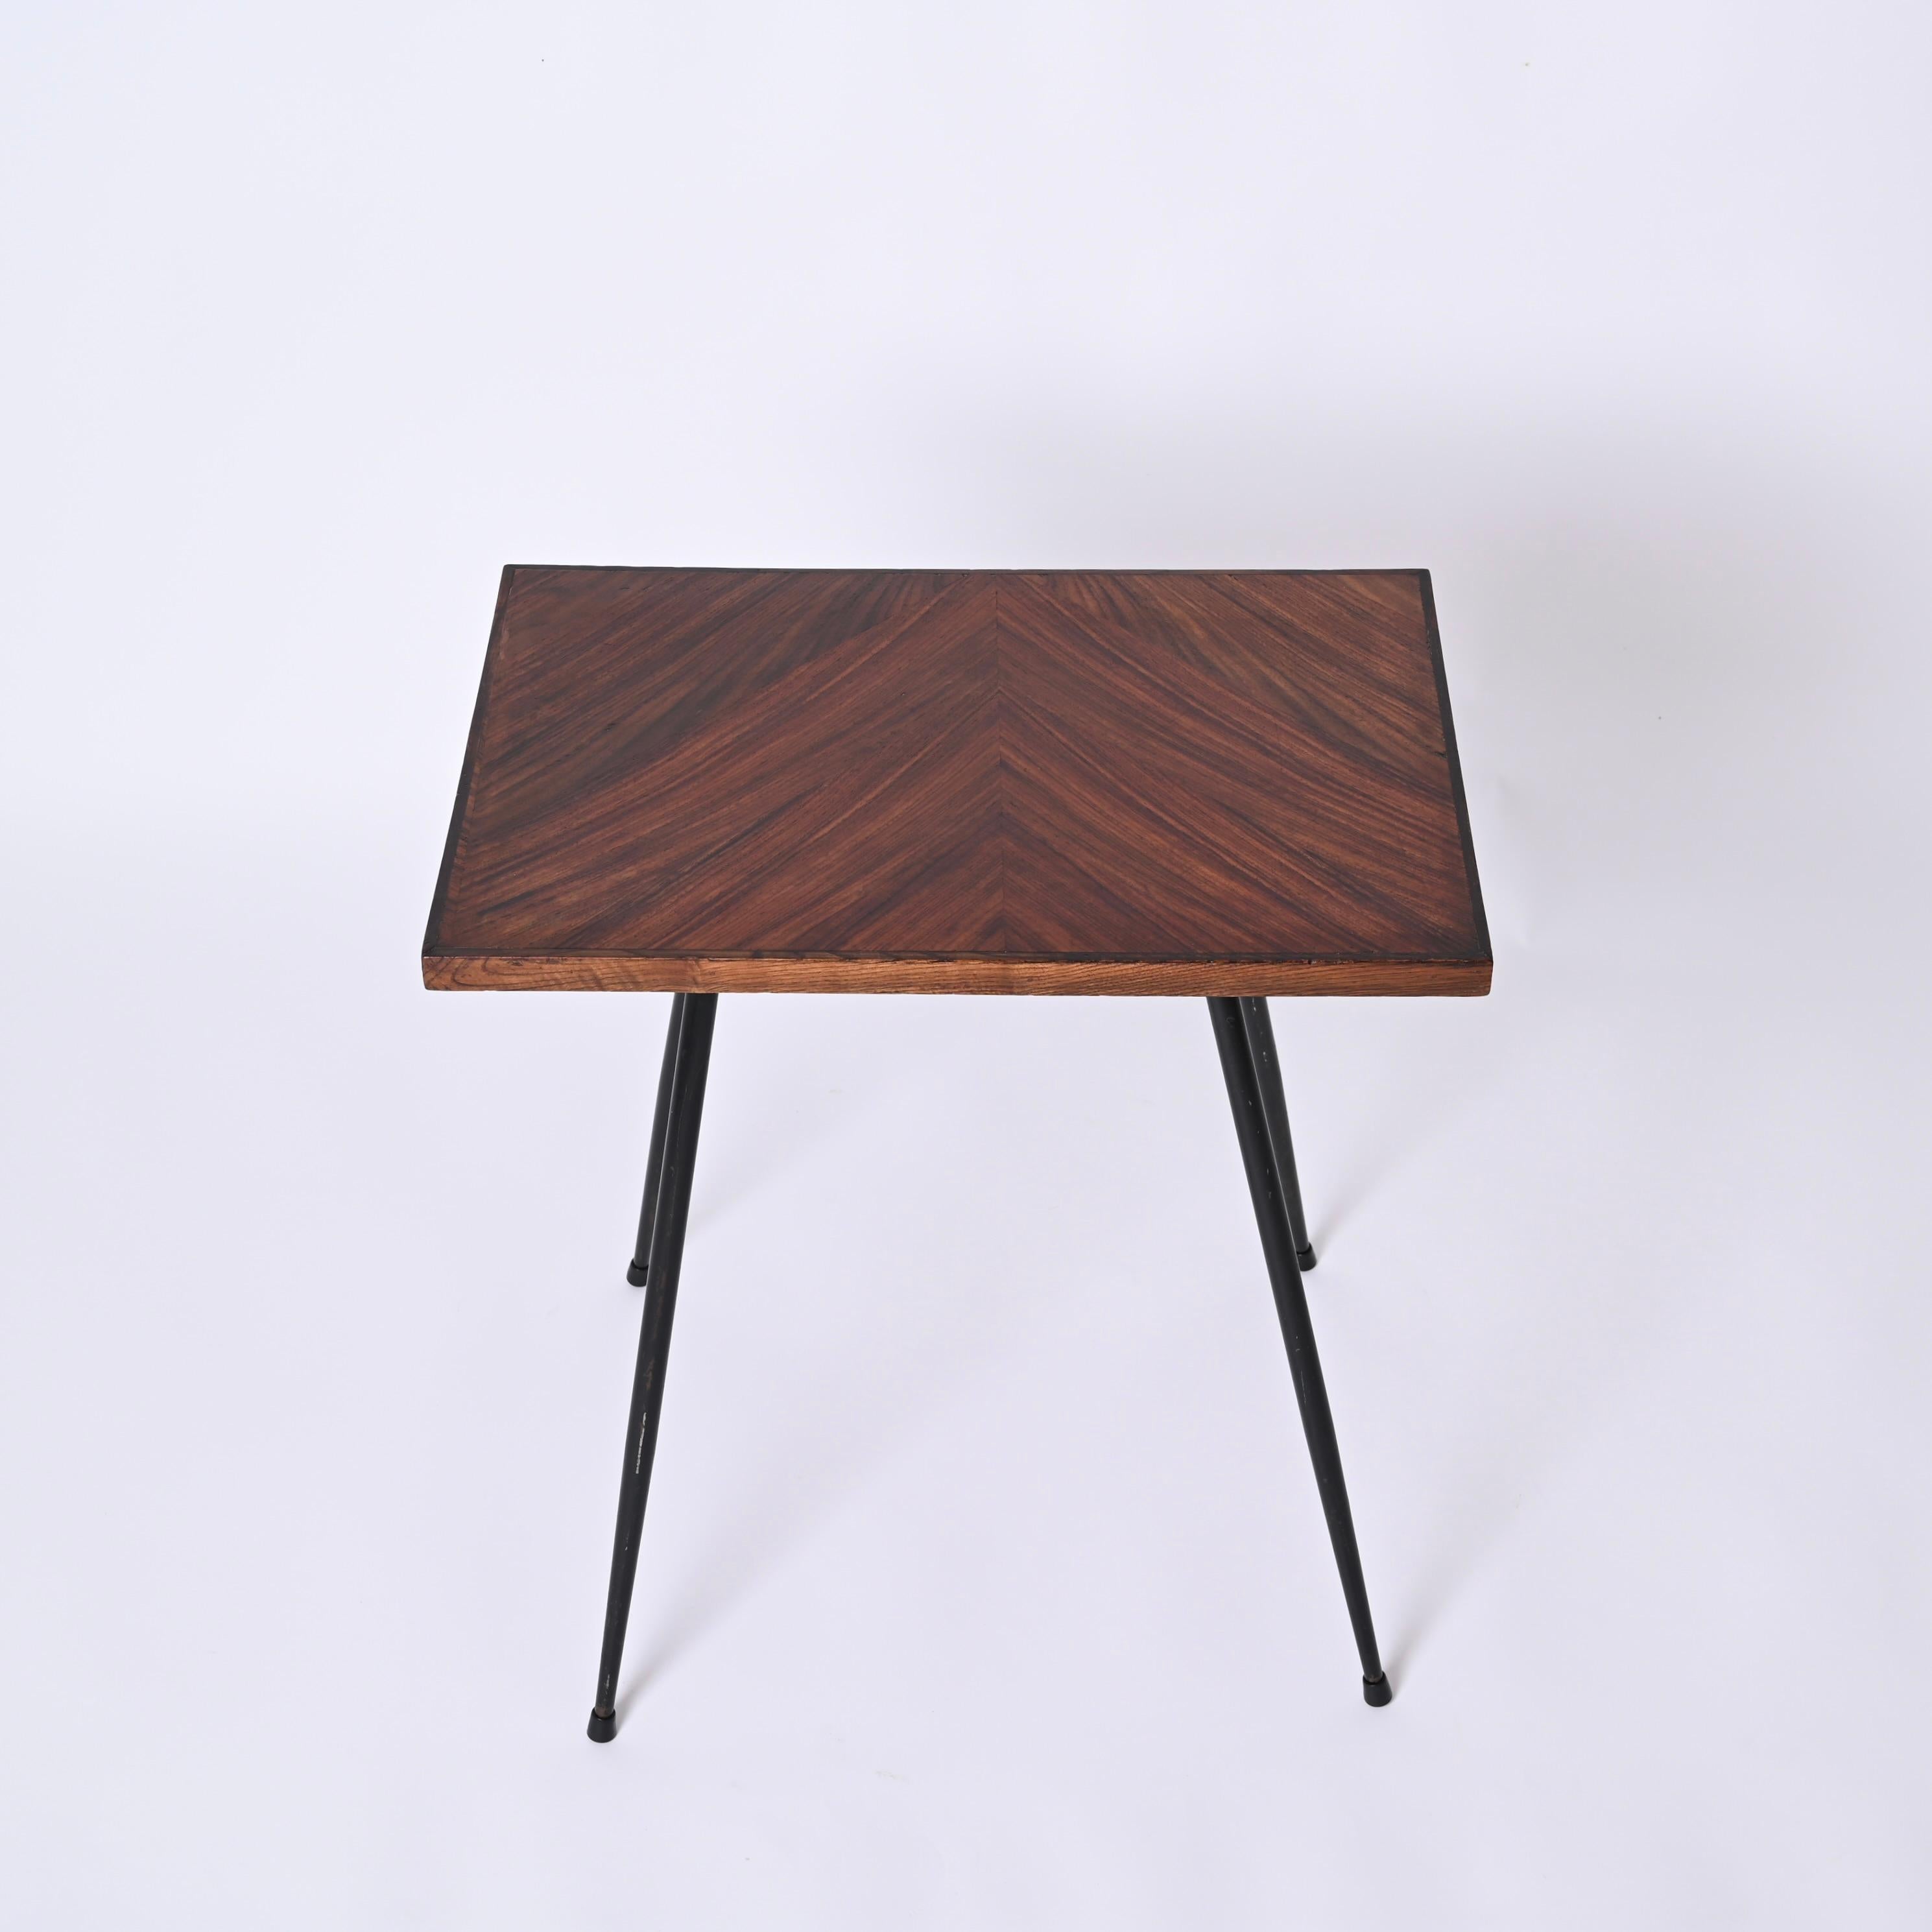 Italian Midcentury Rectangular Side Table in Teak Wood and Enameled Metal, 1950s For Sale 5